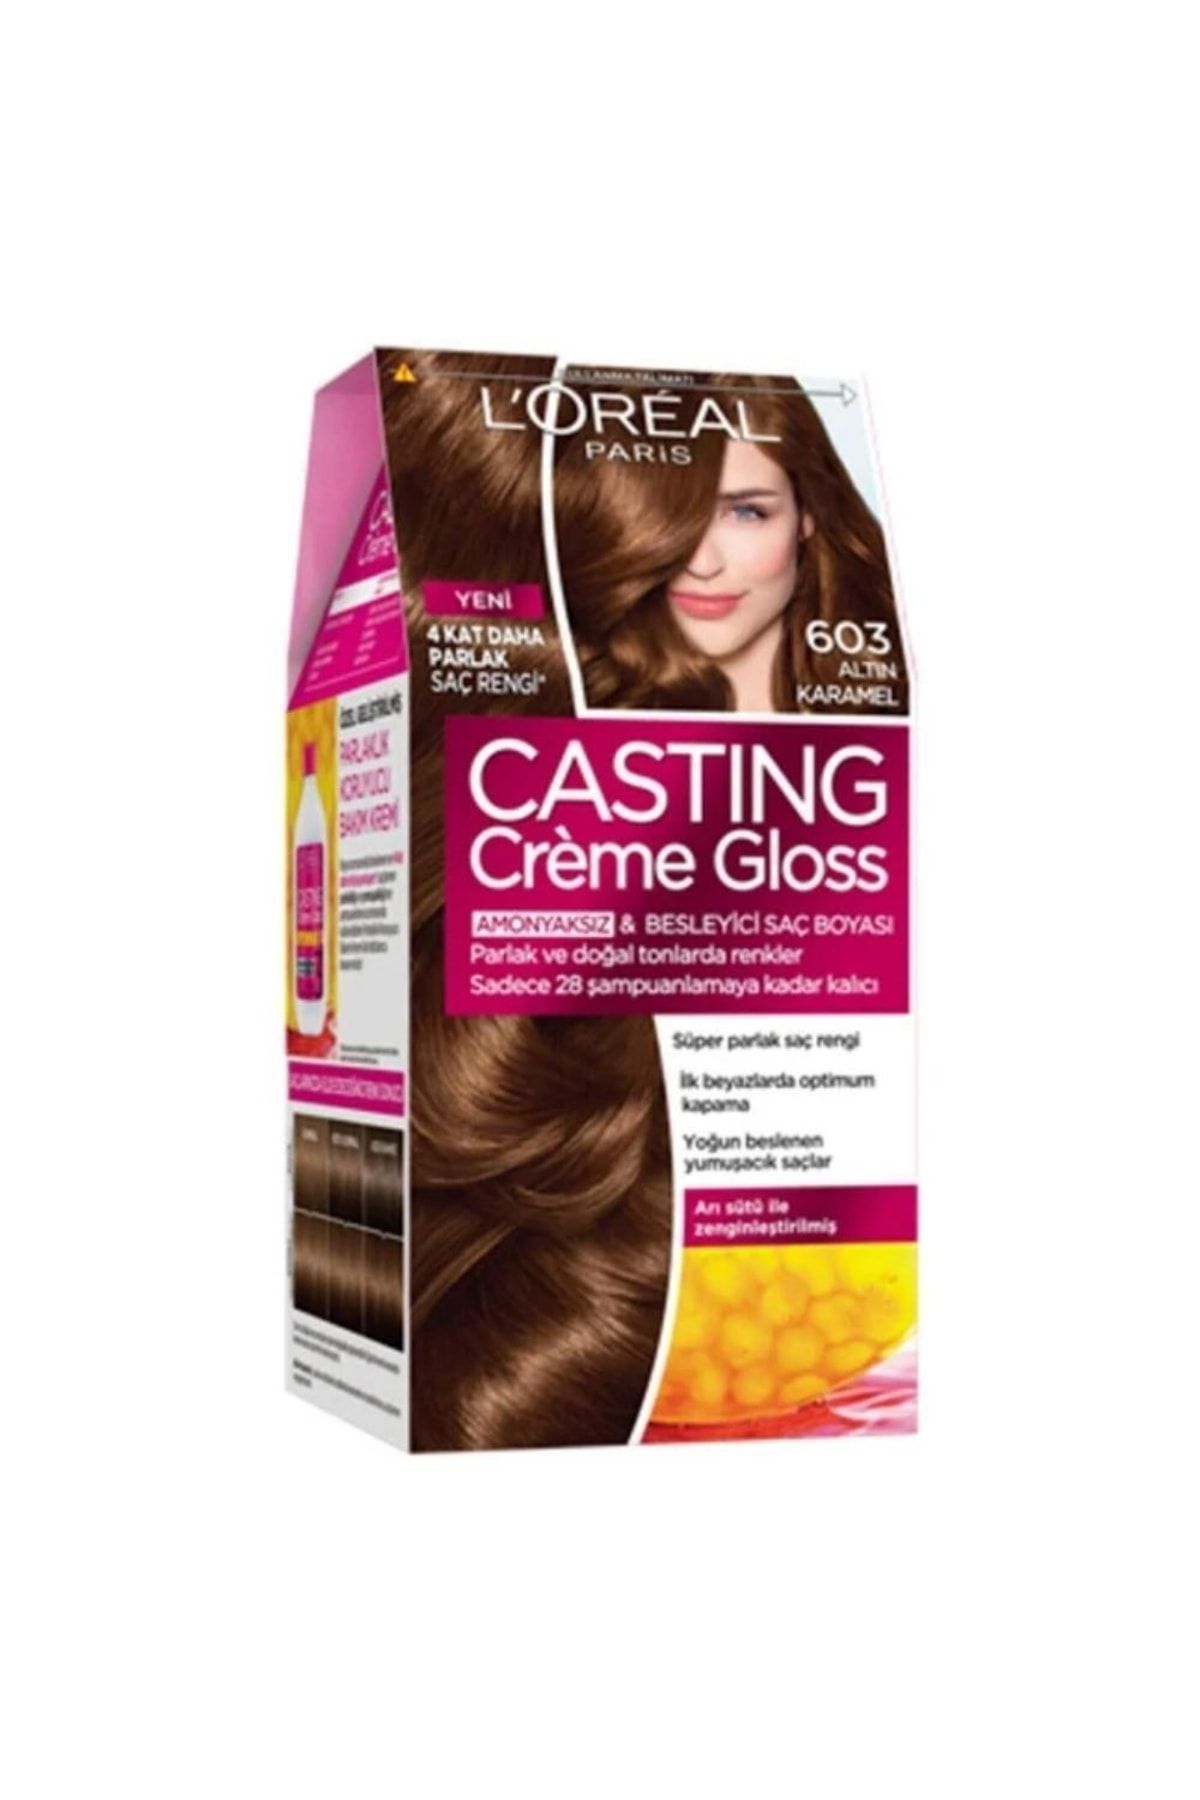 L'Oreal Paris Casting Creme Gloss Saç Boyası - 603 Altın Karamel